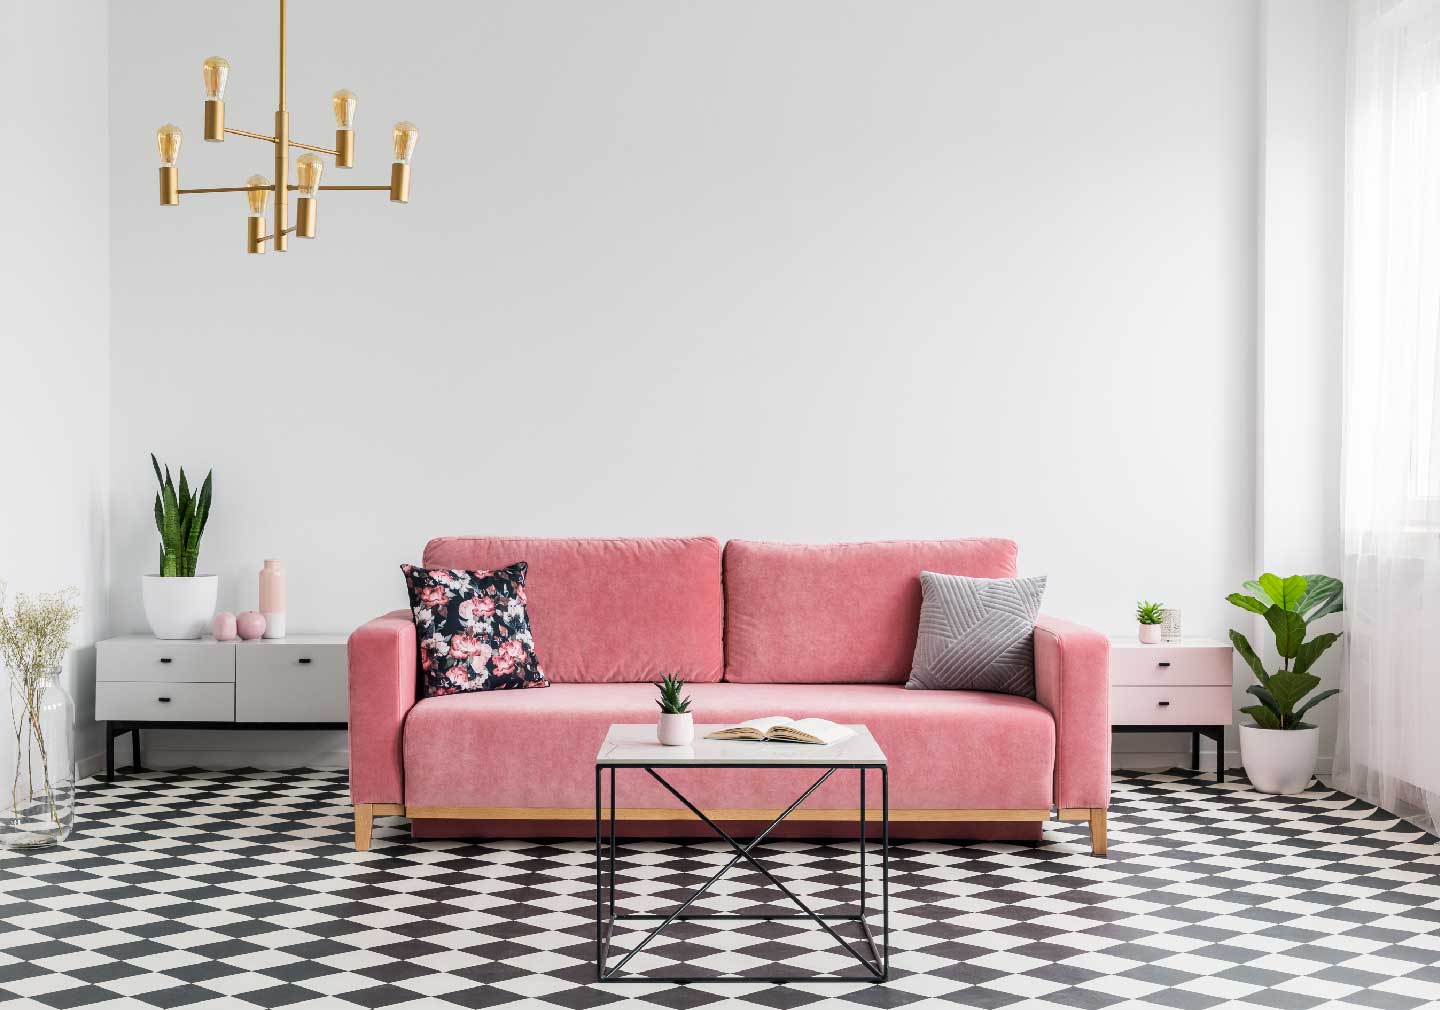 living room interior Designs - pink sofa with chessboard floor